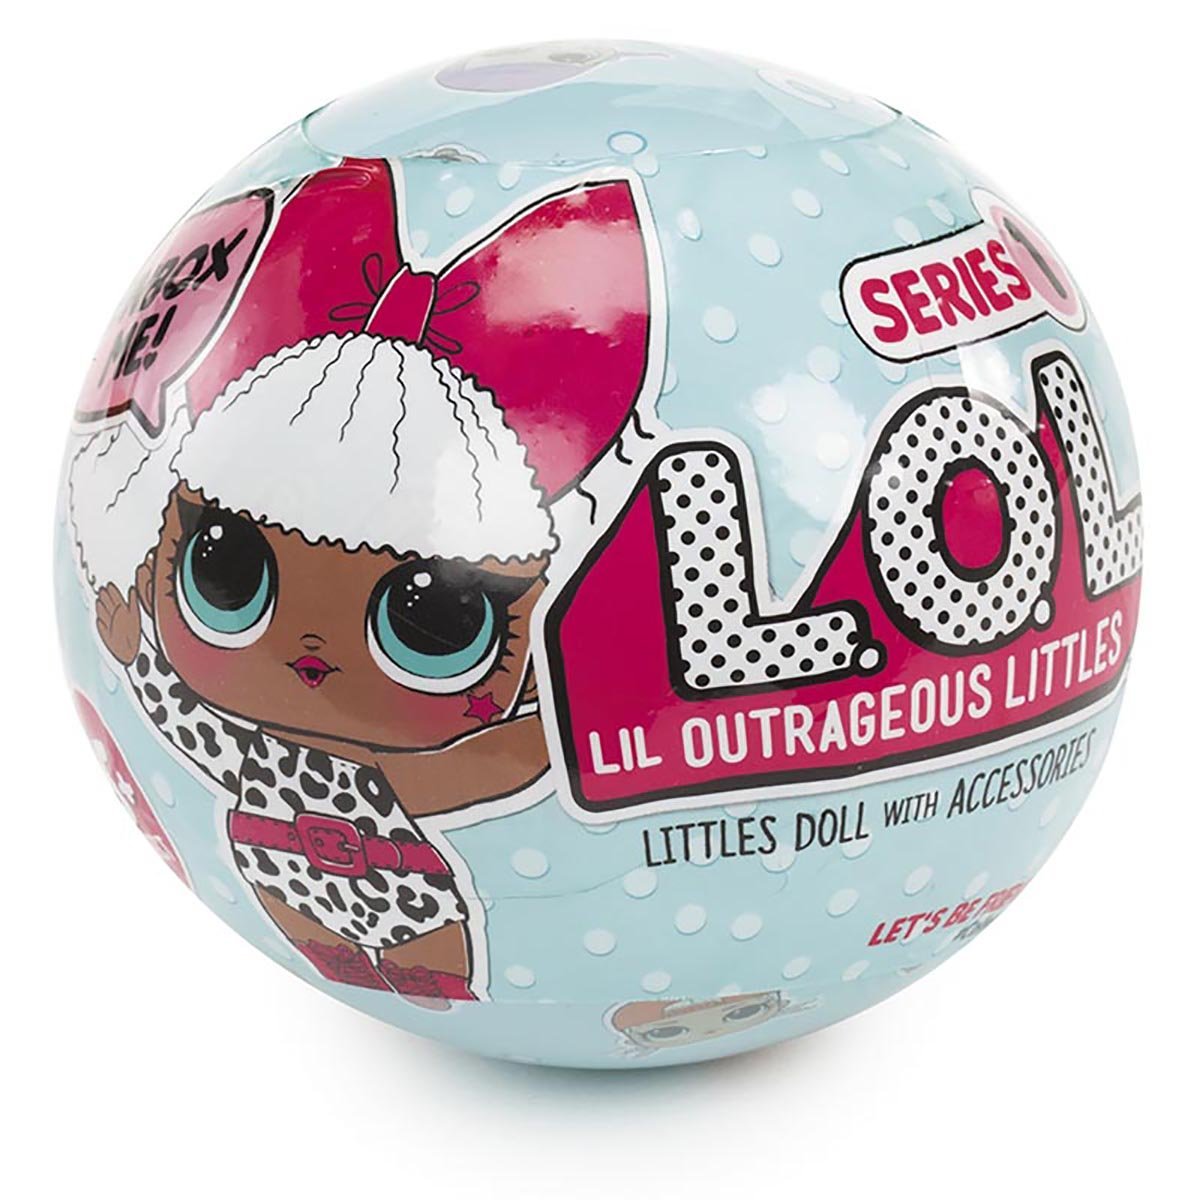 Lol Surprise Tots Ball Doll Ruz